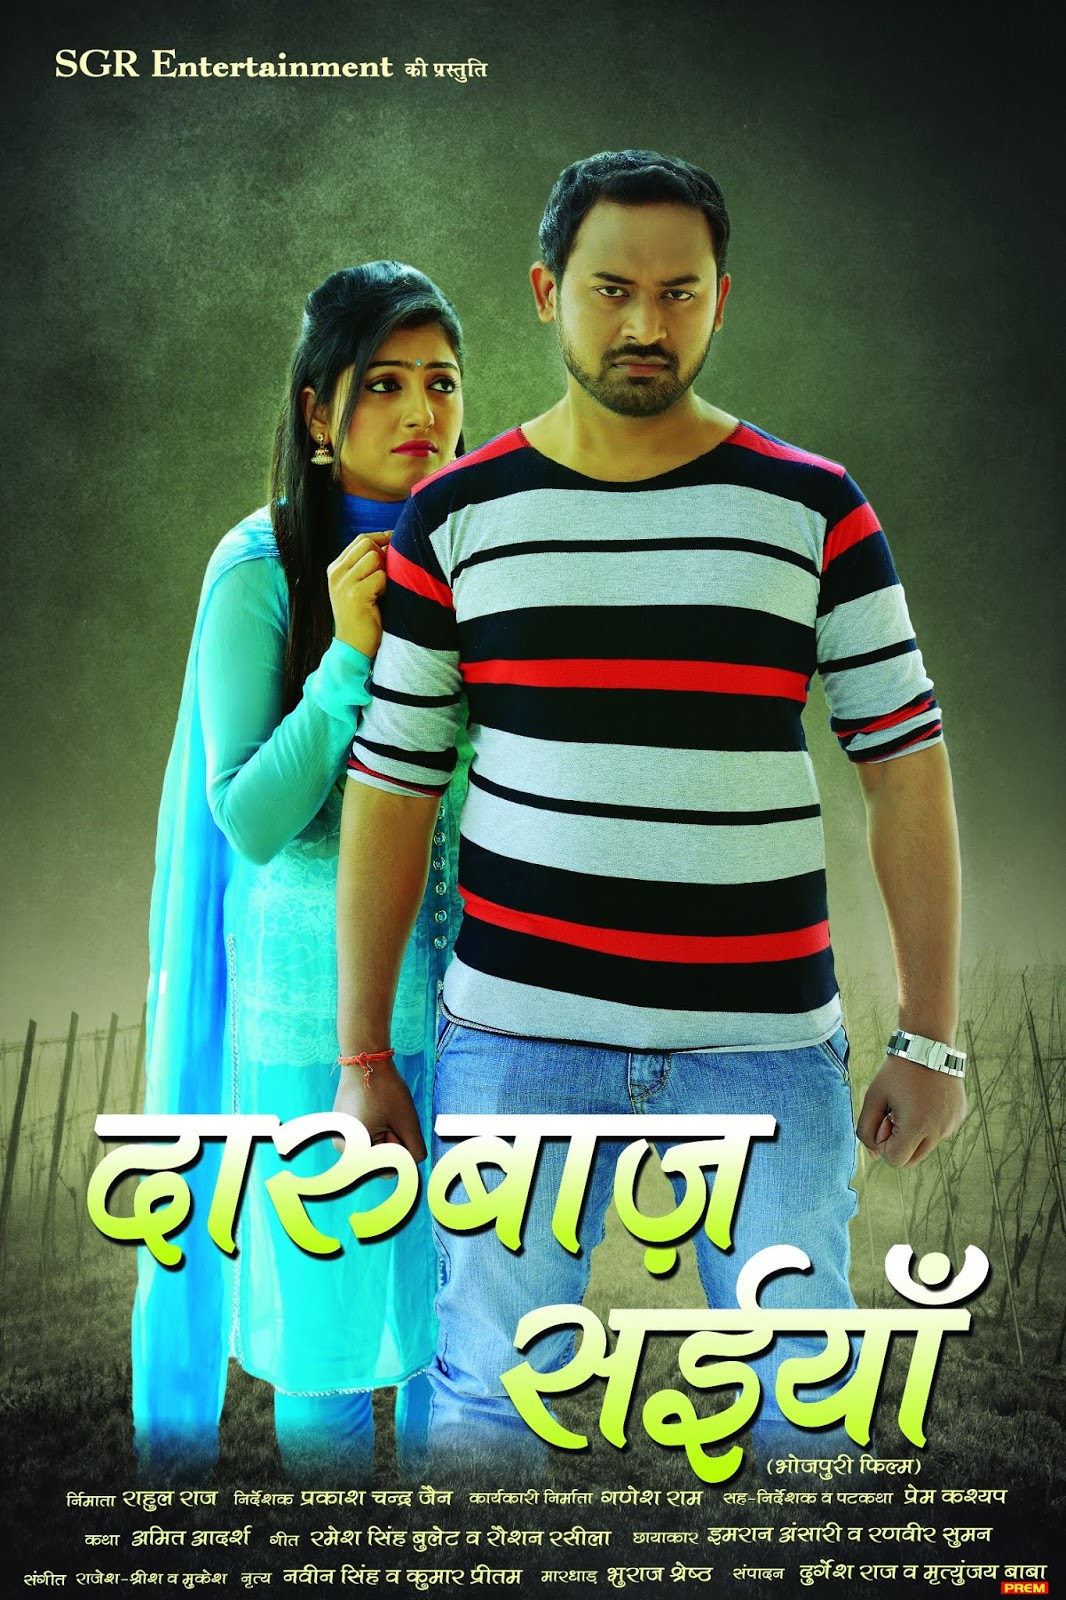 First look Poster Of Bhojpuri Movie Darubaaz Saiyan. Latest Bhojpuri Movie Darubaaz Saiyan Poster, movie wallpaper, Photos